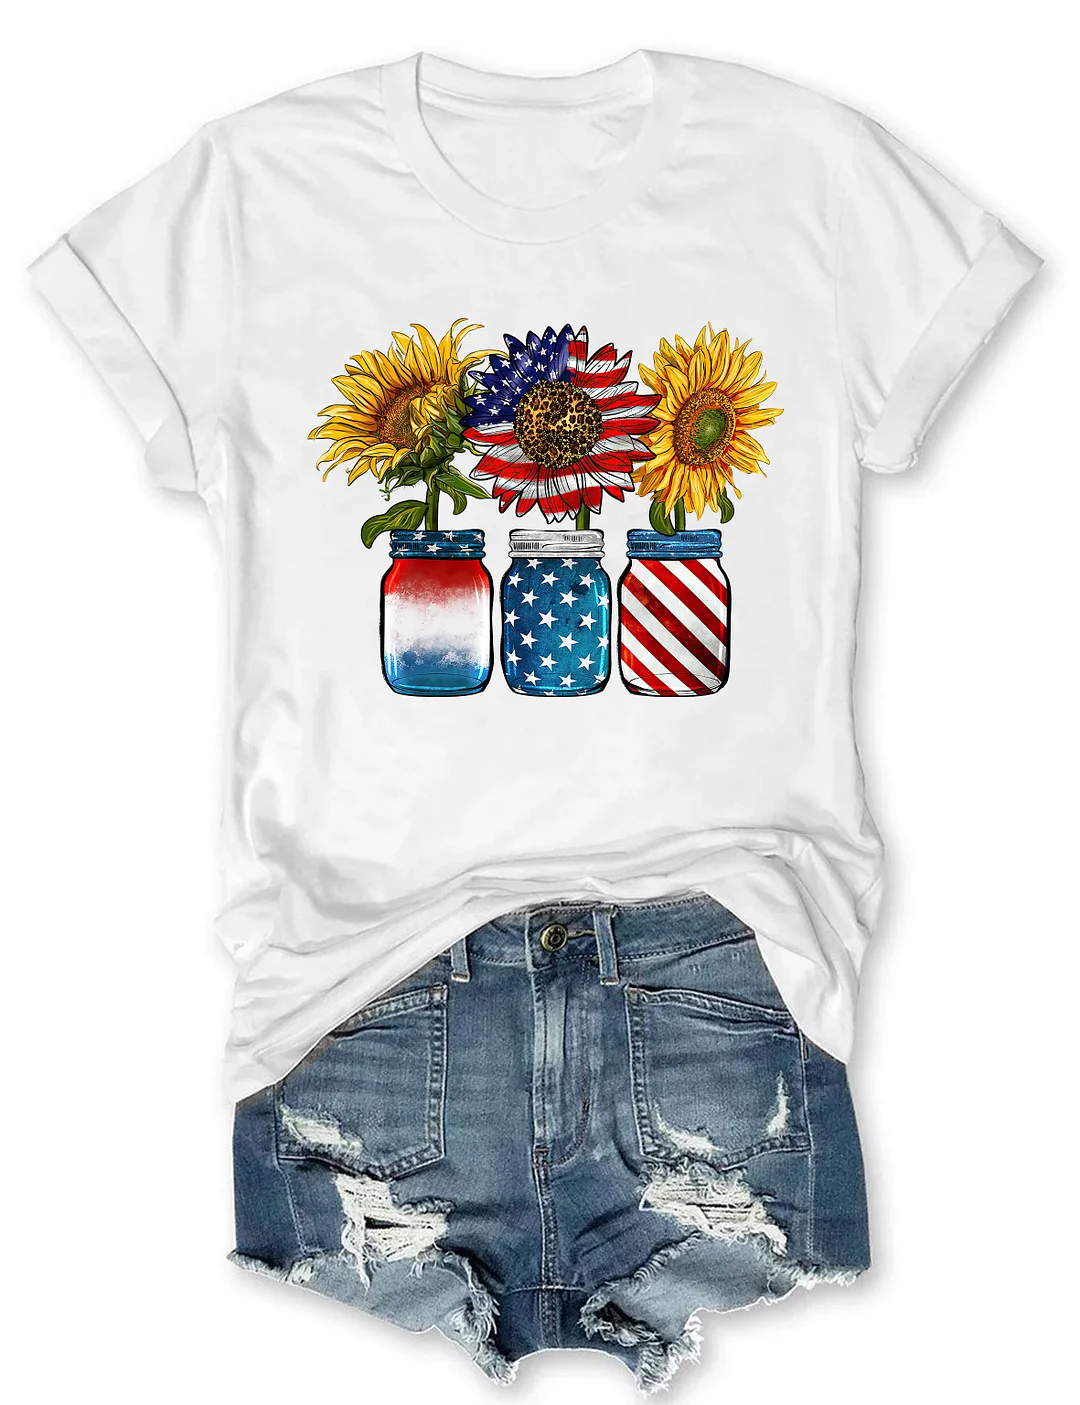 Patritotic Sunflower 4th Of July T-shirt